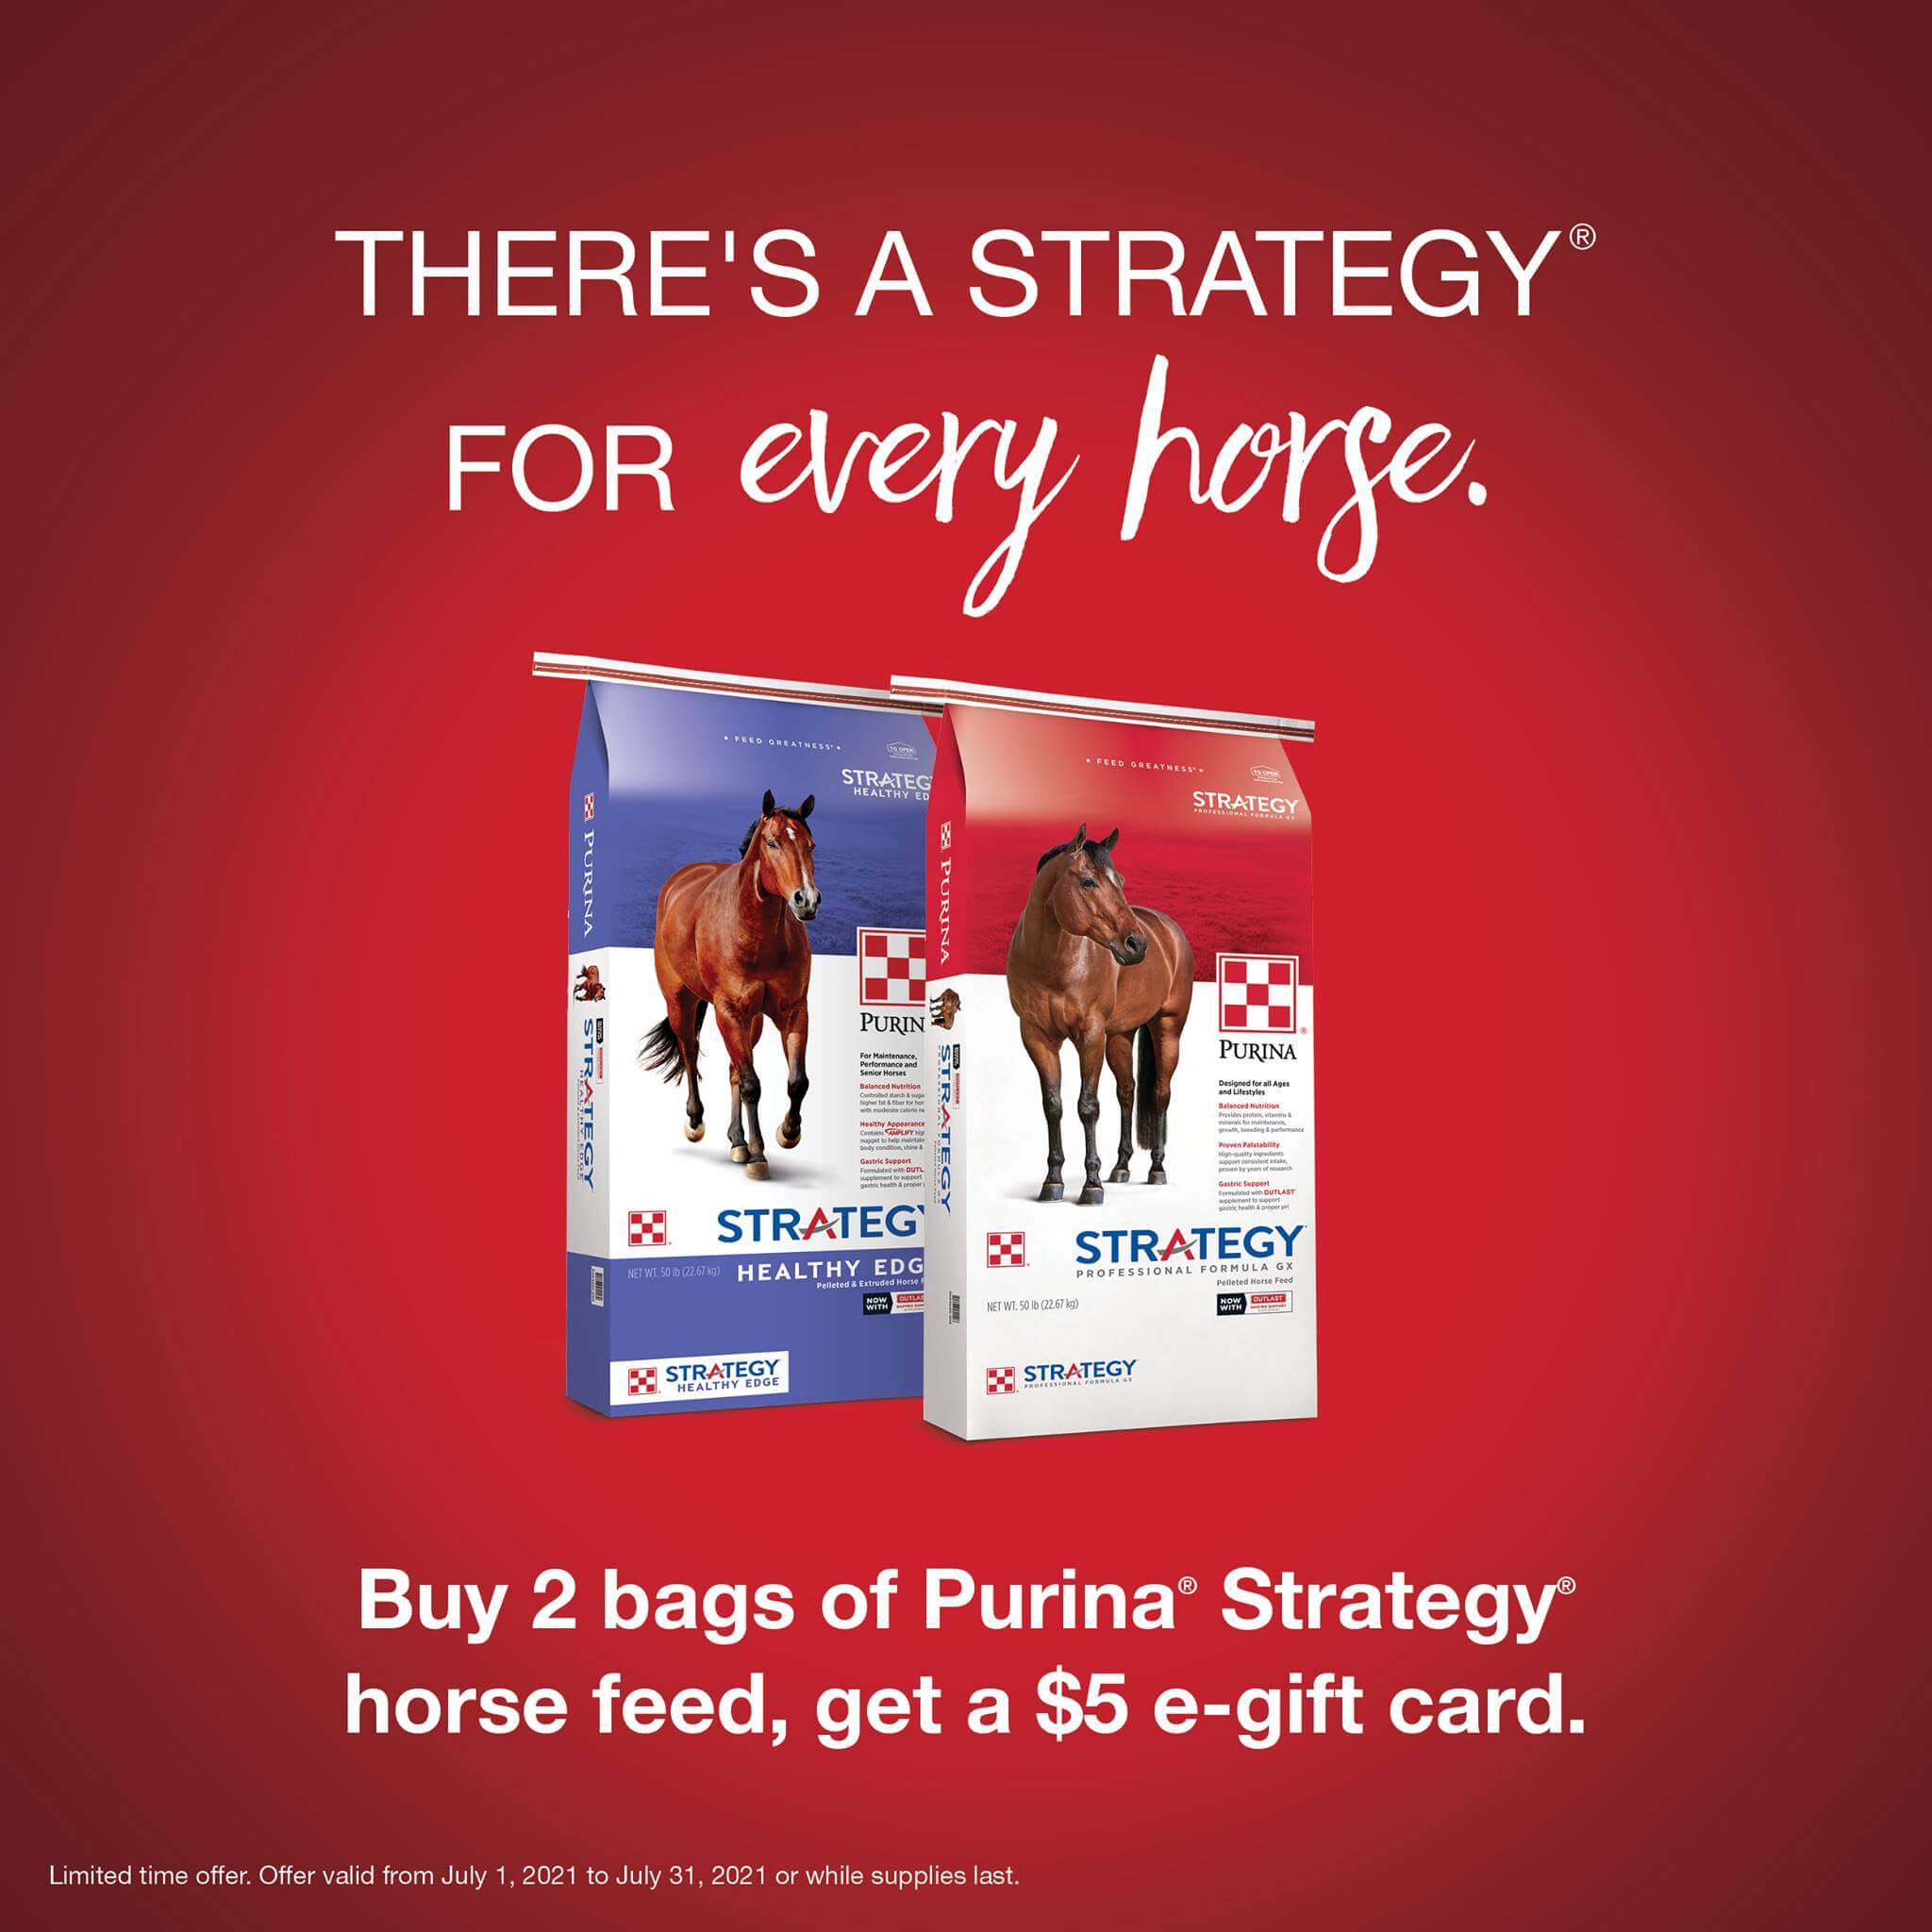 purina horse feed strategy healthy edge feed greatness barrel racing